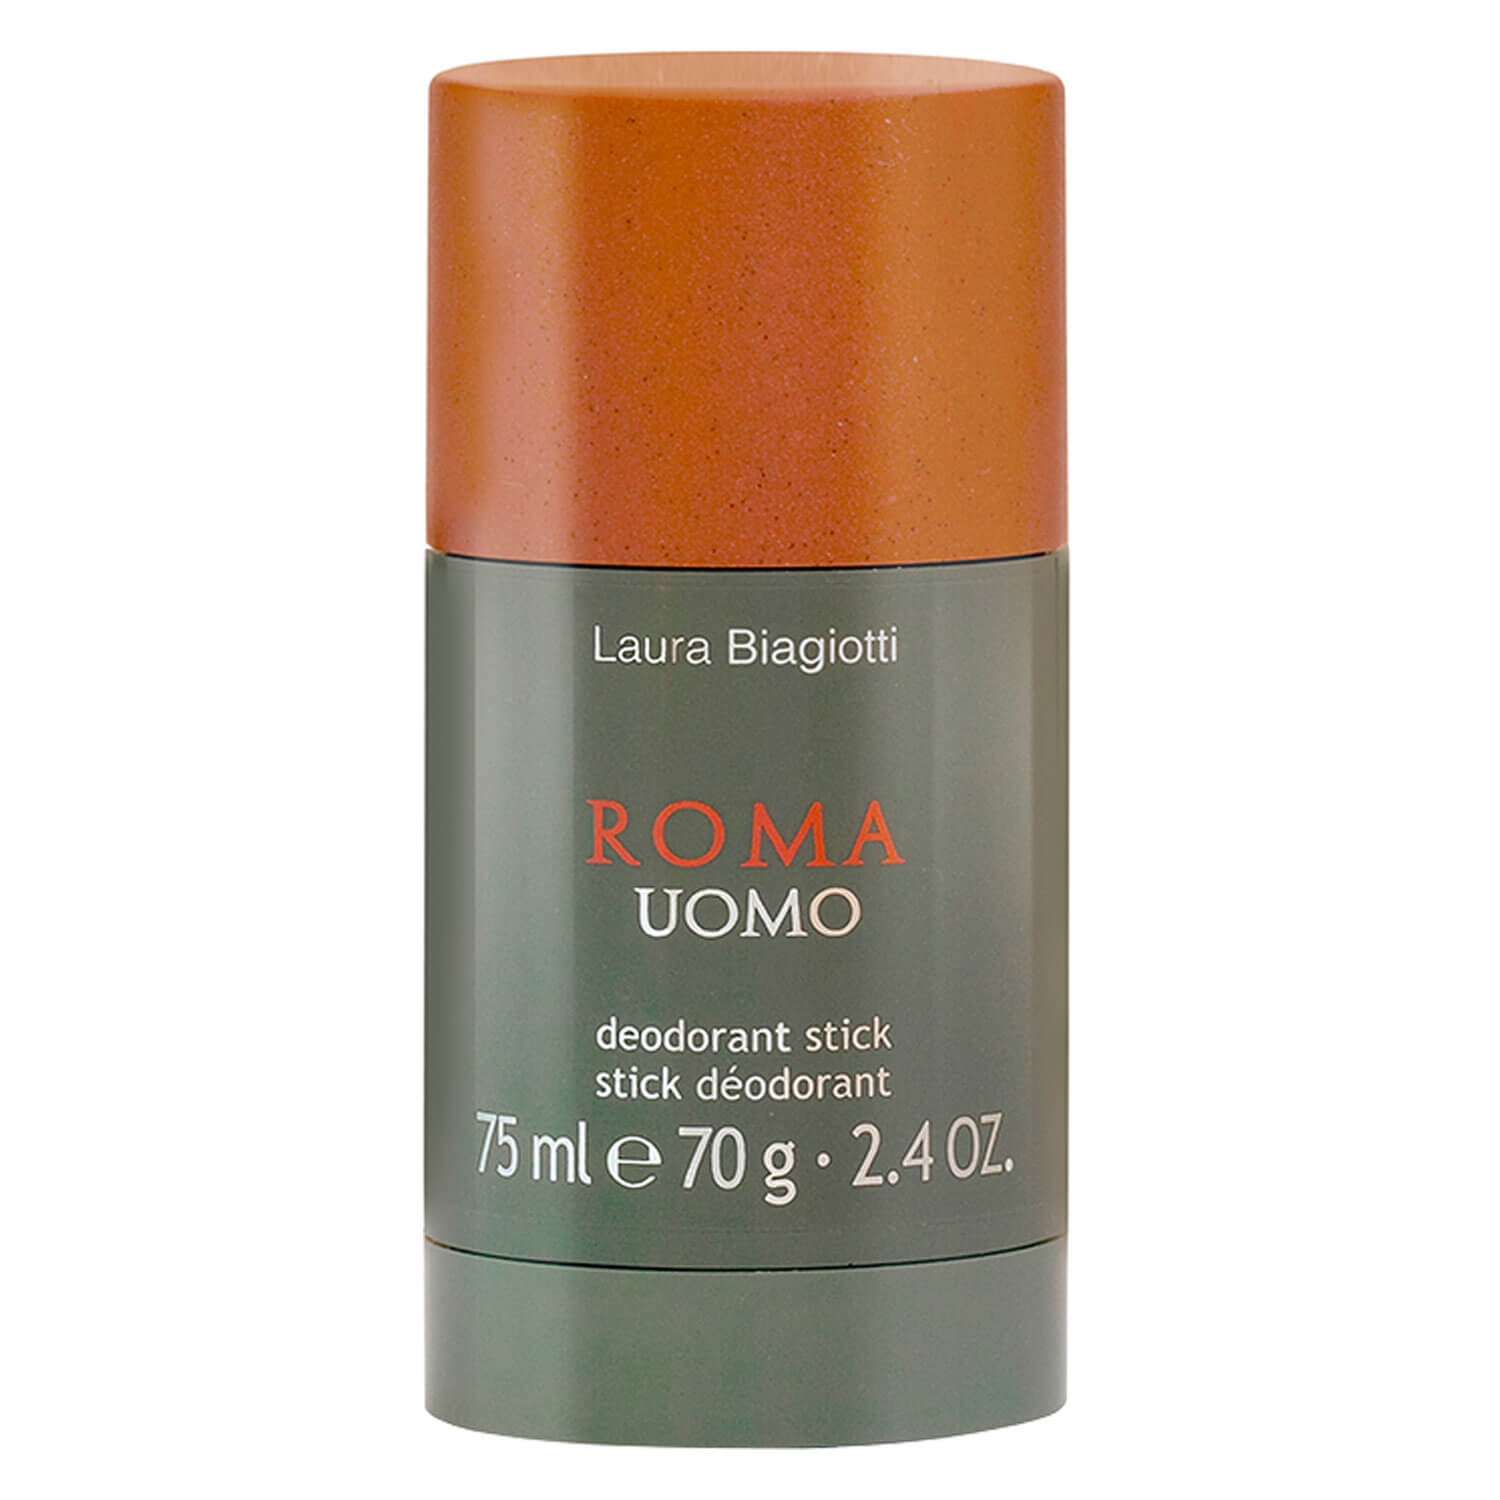 Produktbild von Roma - Uomo Deodorant Stick